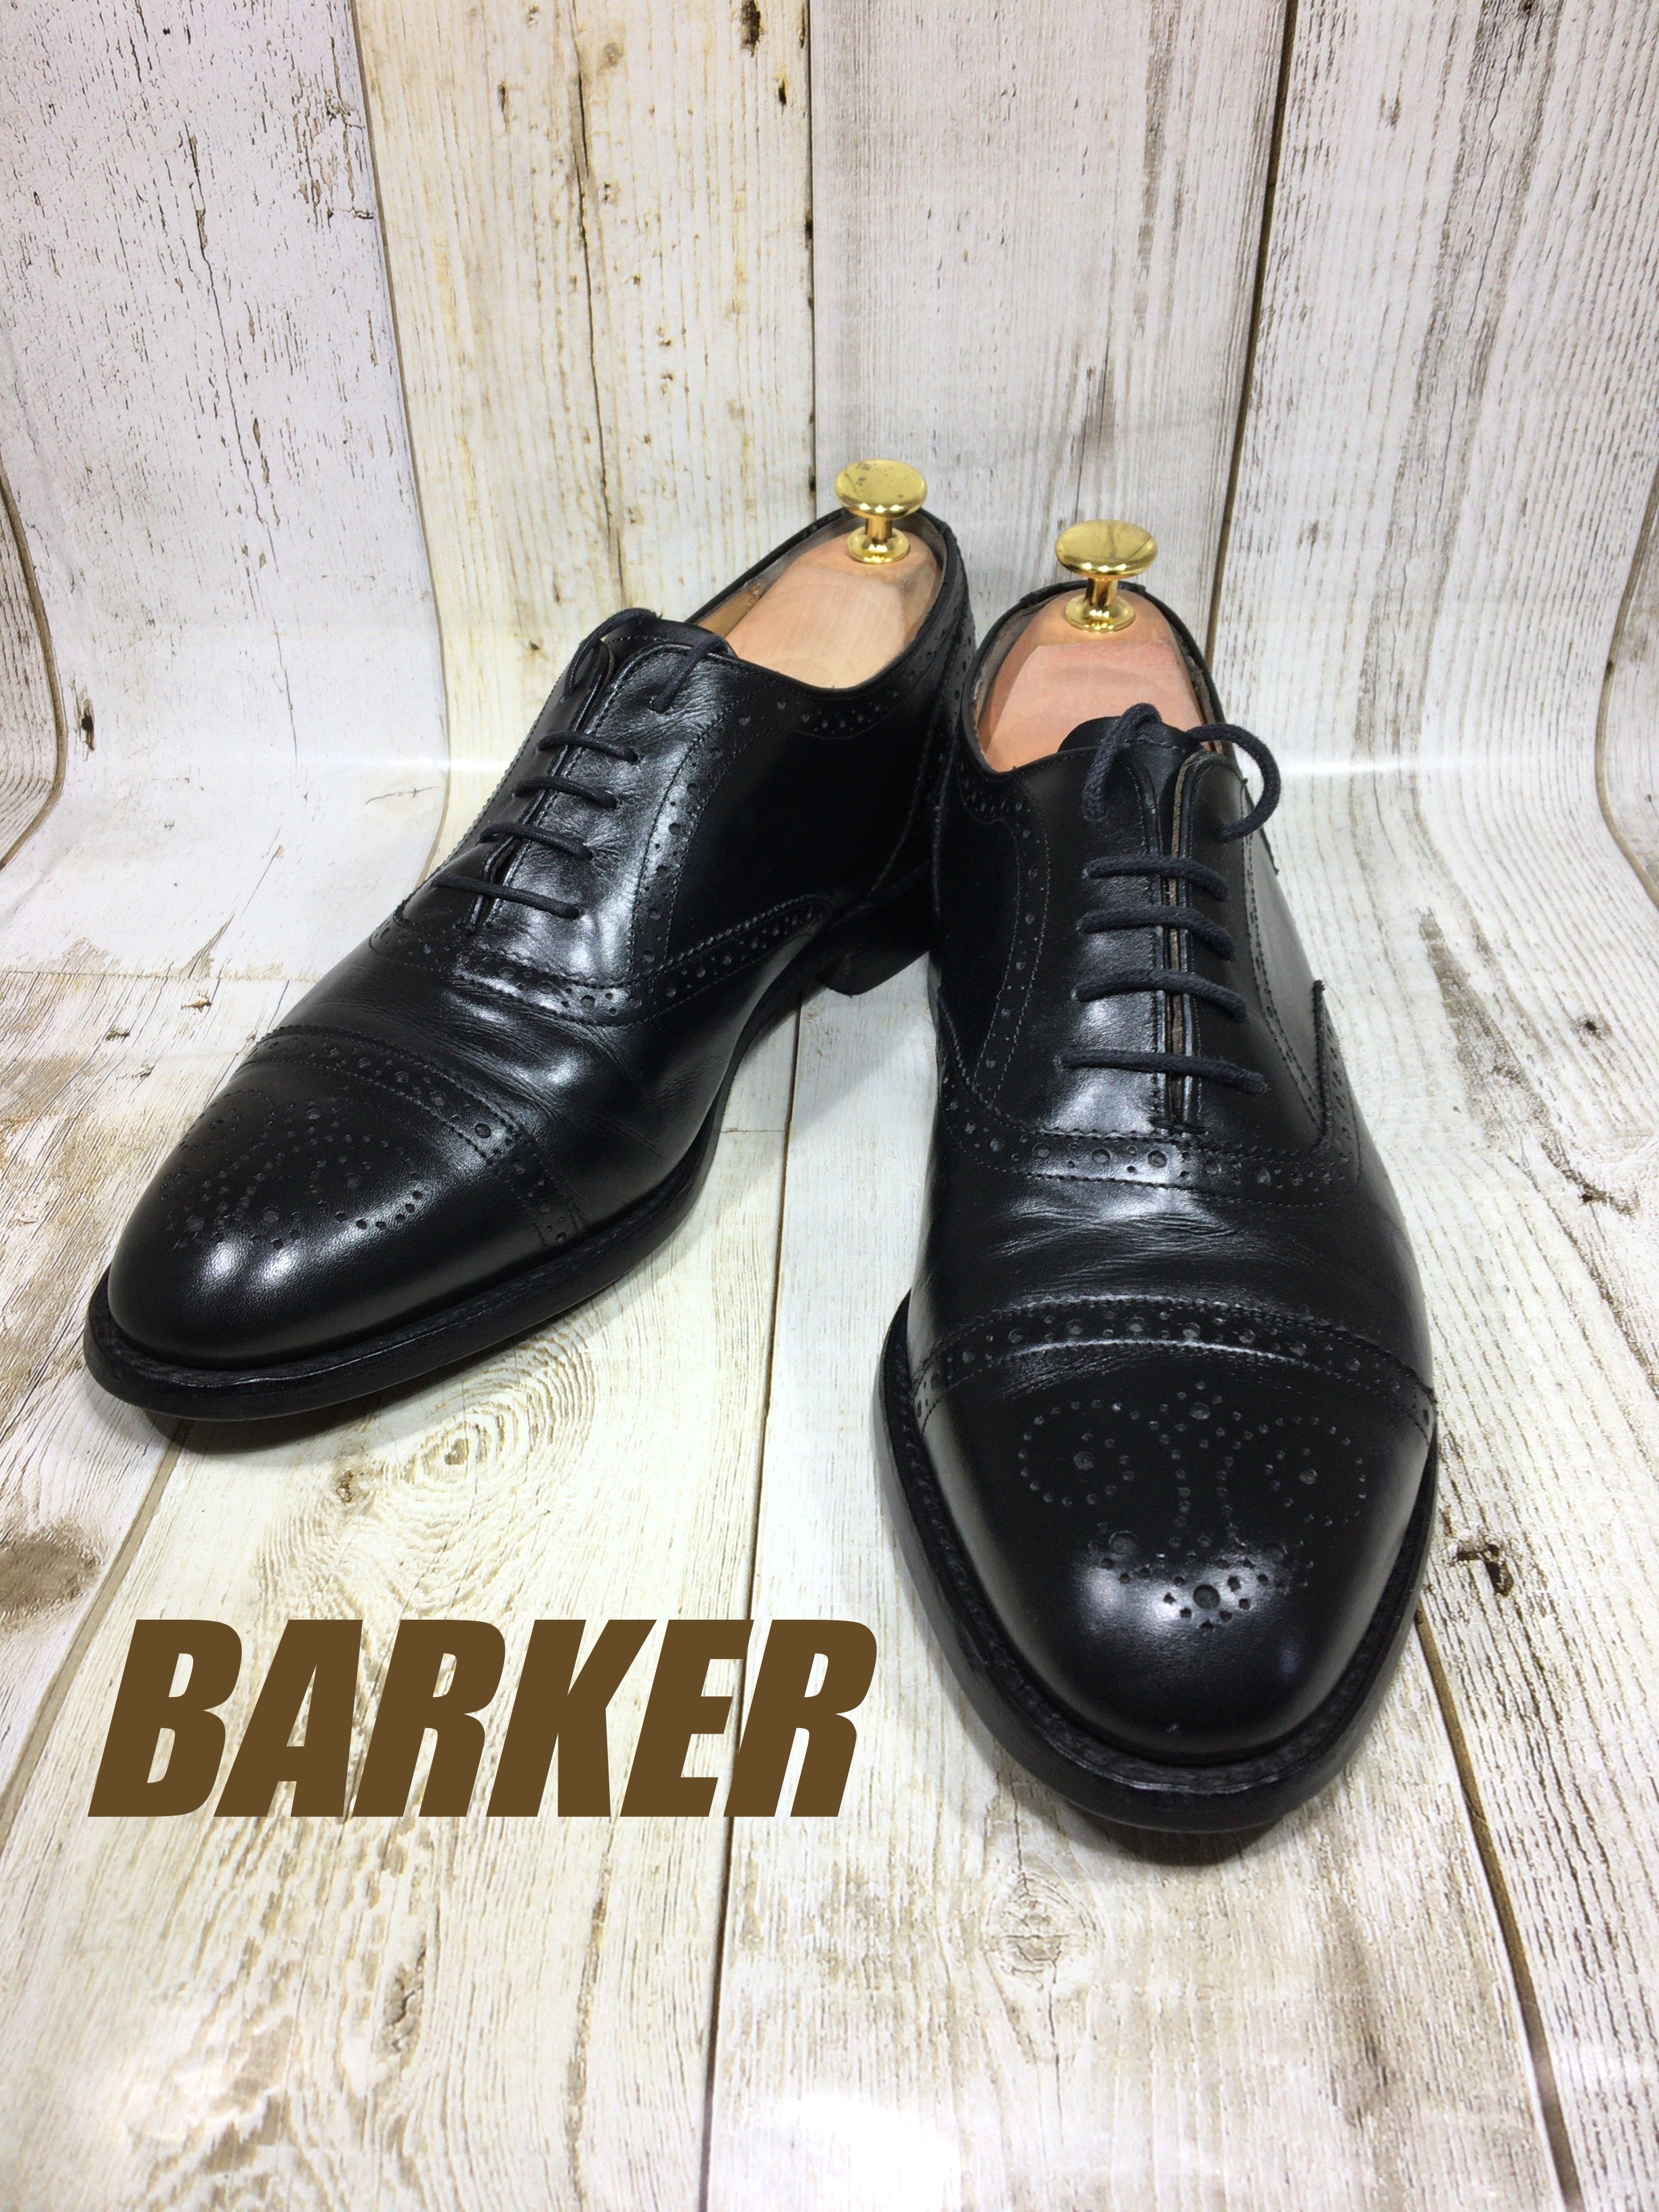 Barker バーカー セミブローグ Uk8 26 5cm 中古靴 革靴 ブーツ通販専門店 Dafsmart ダフスマート Online Shop